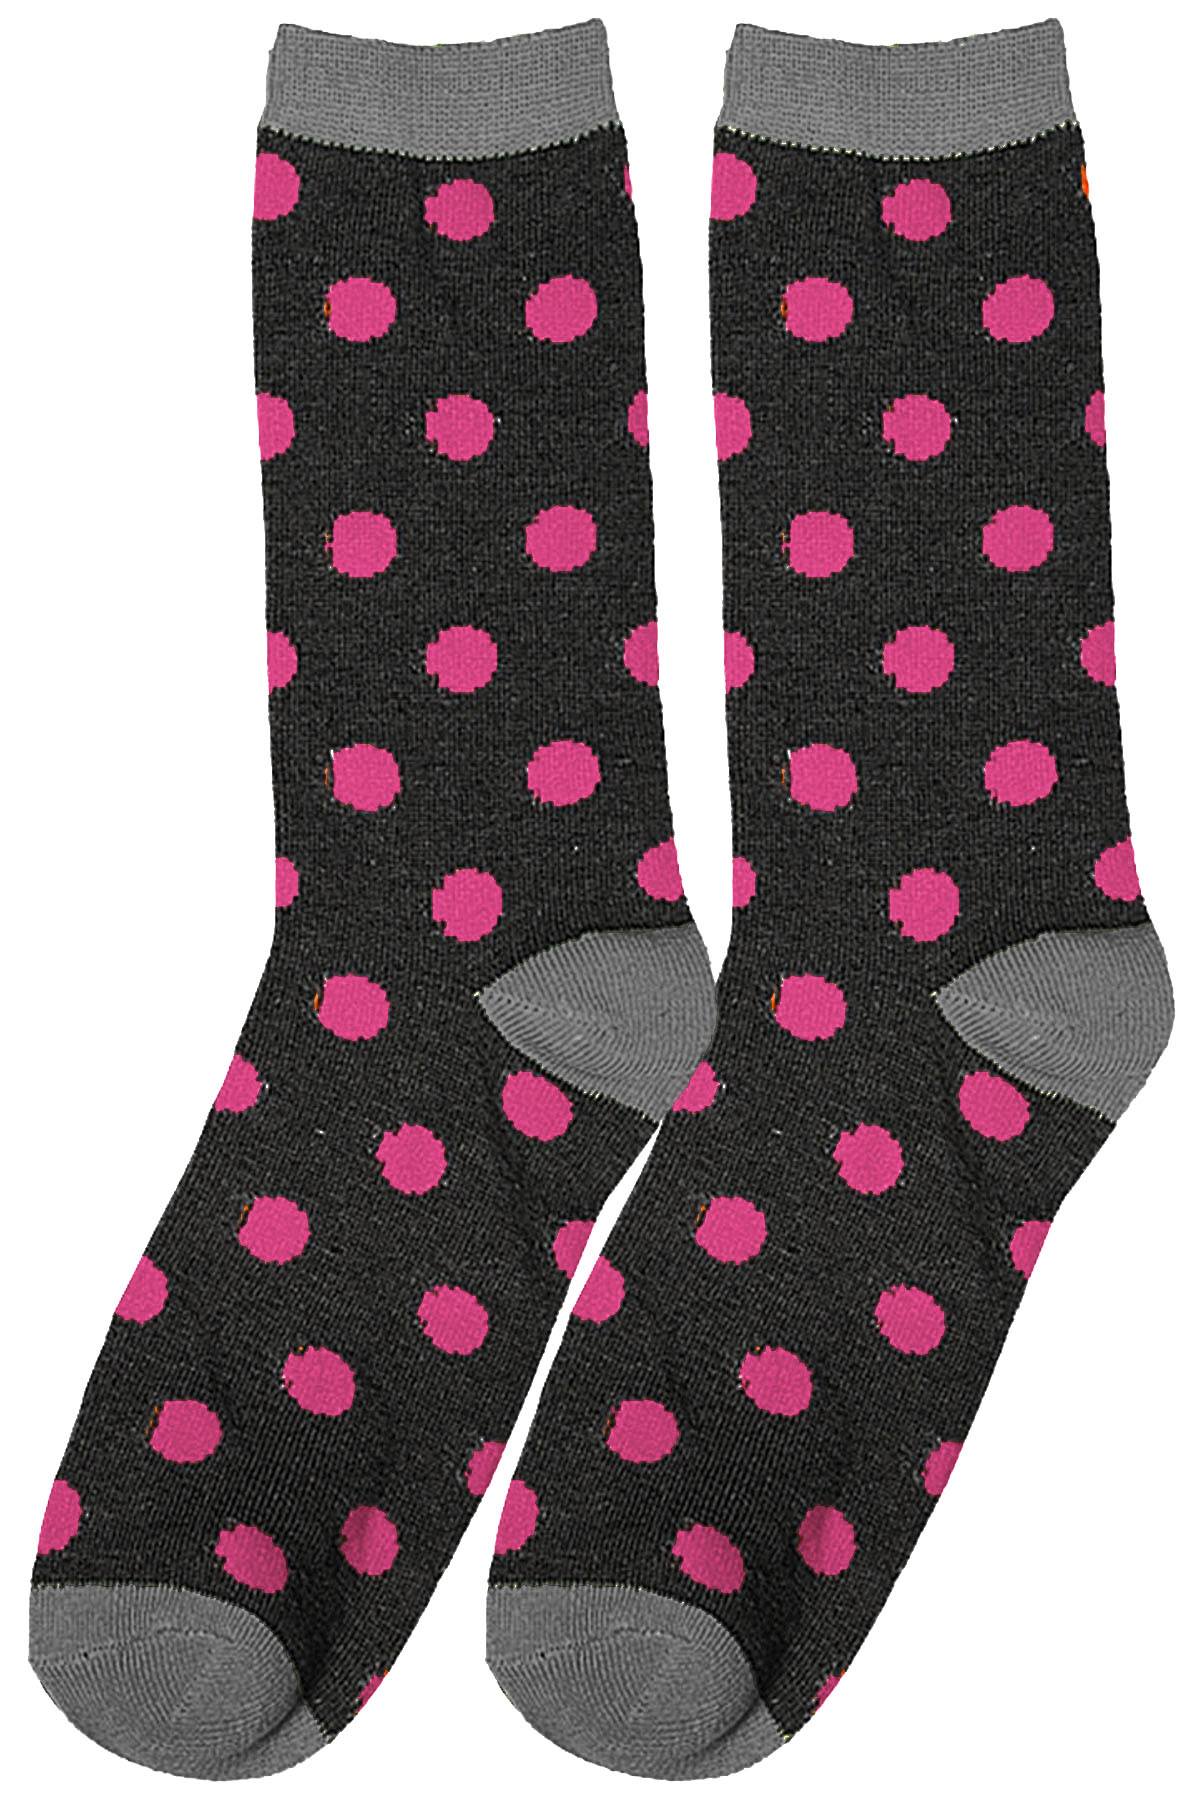 Mamia Black/Charcoal/Fuchsia Polka Dot Crew Socks